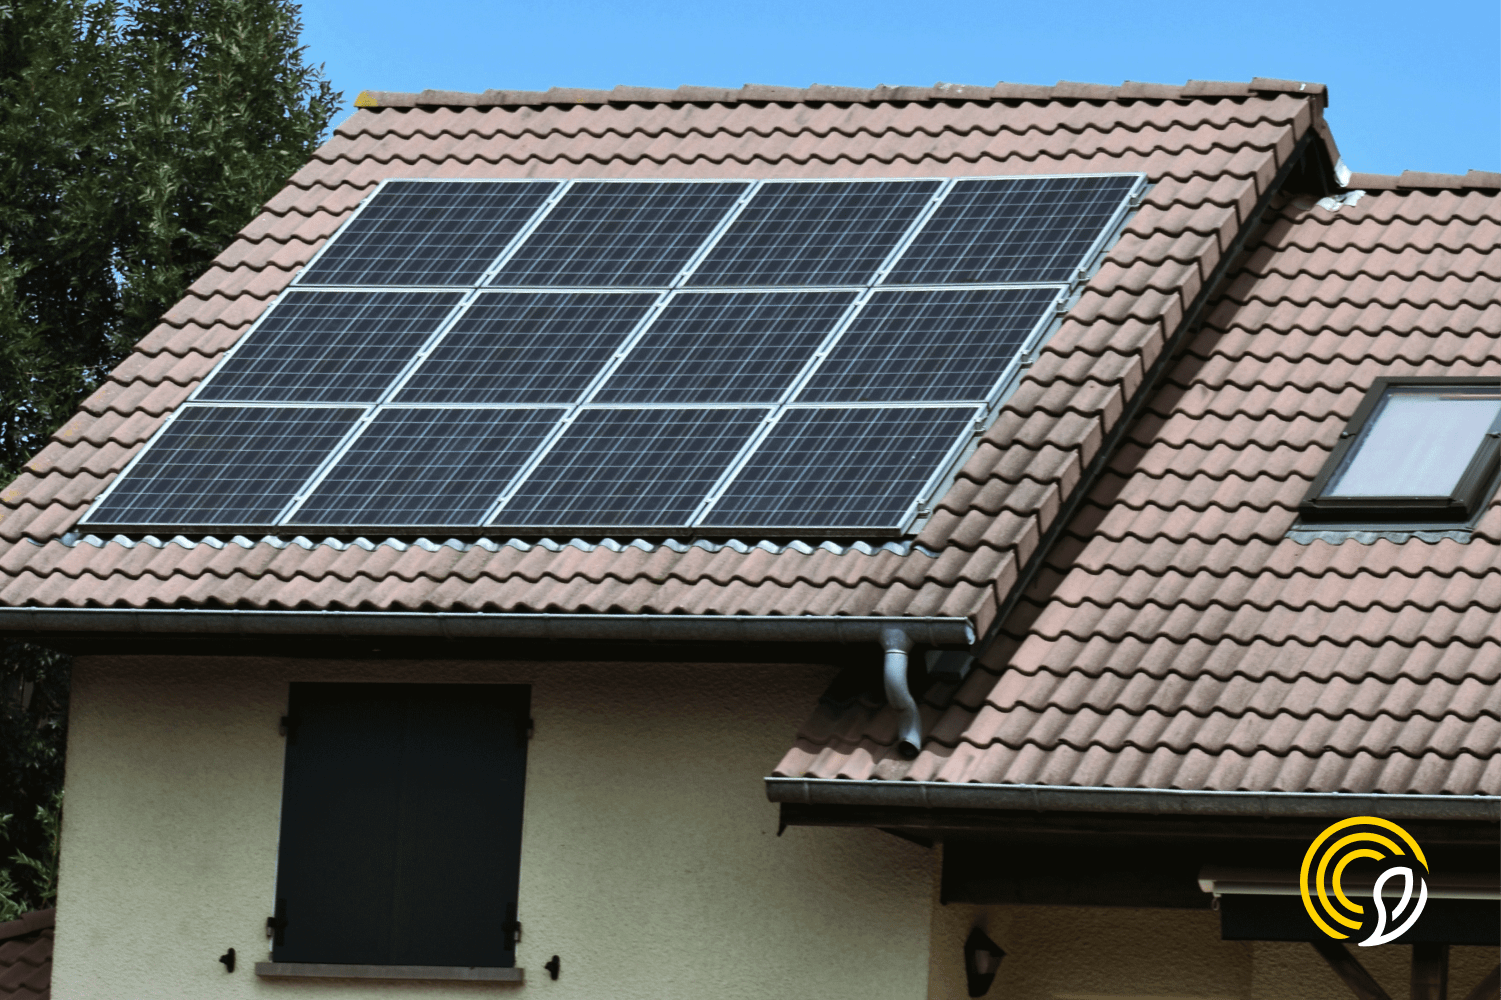 Tilting of solar panels